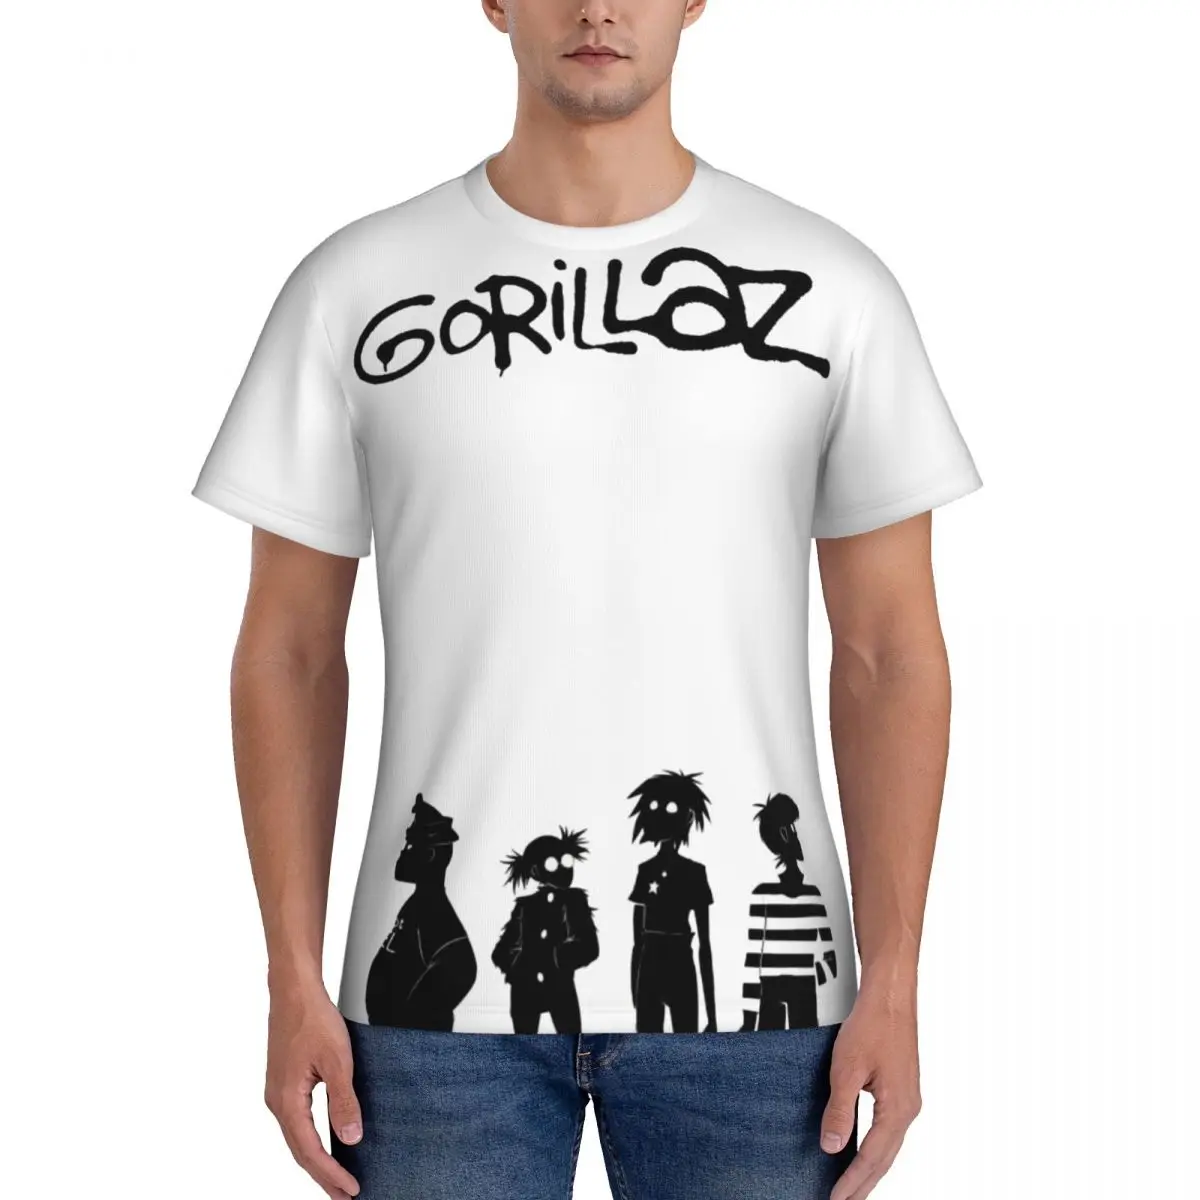 

Cool Music Band Gorillaz Skateboard 1 Men's tight fitting sports T-shirt, BreathableT-shirt